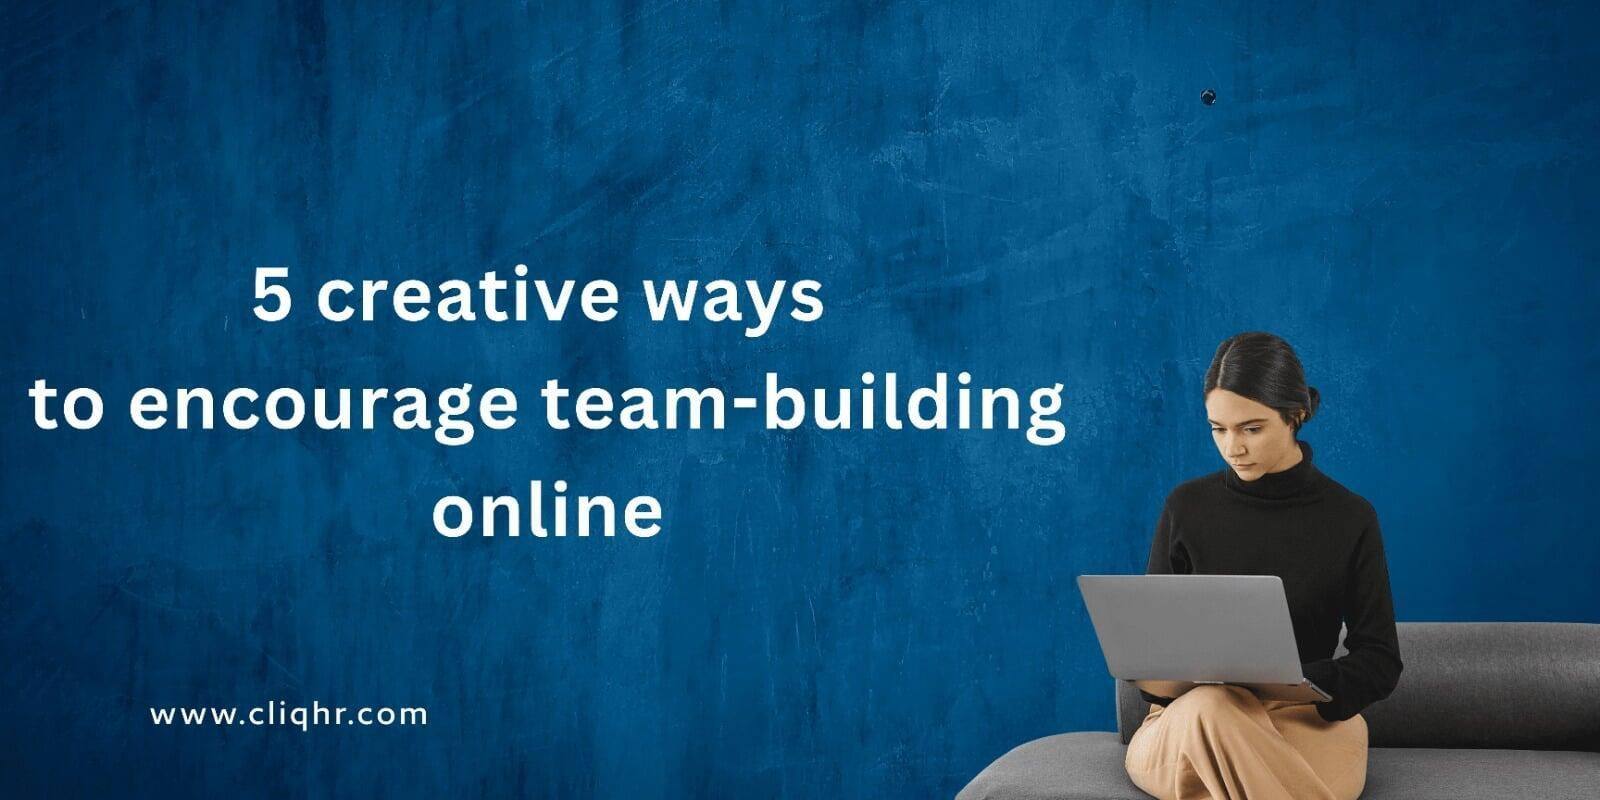 Five creative ways to encourage team-building online